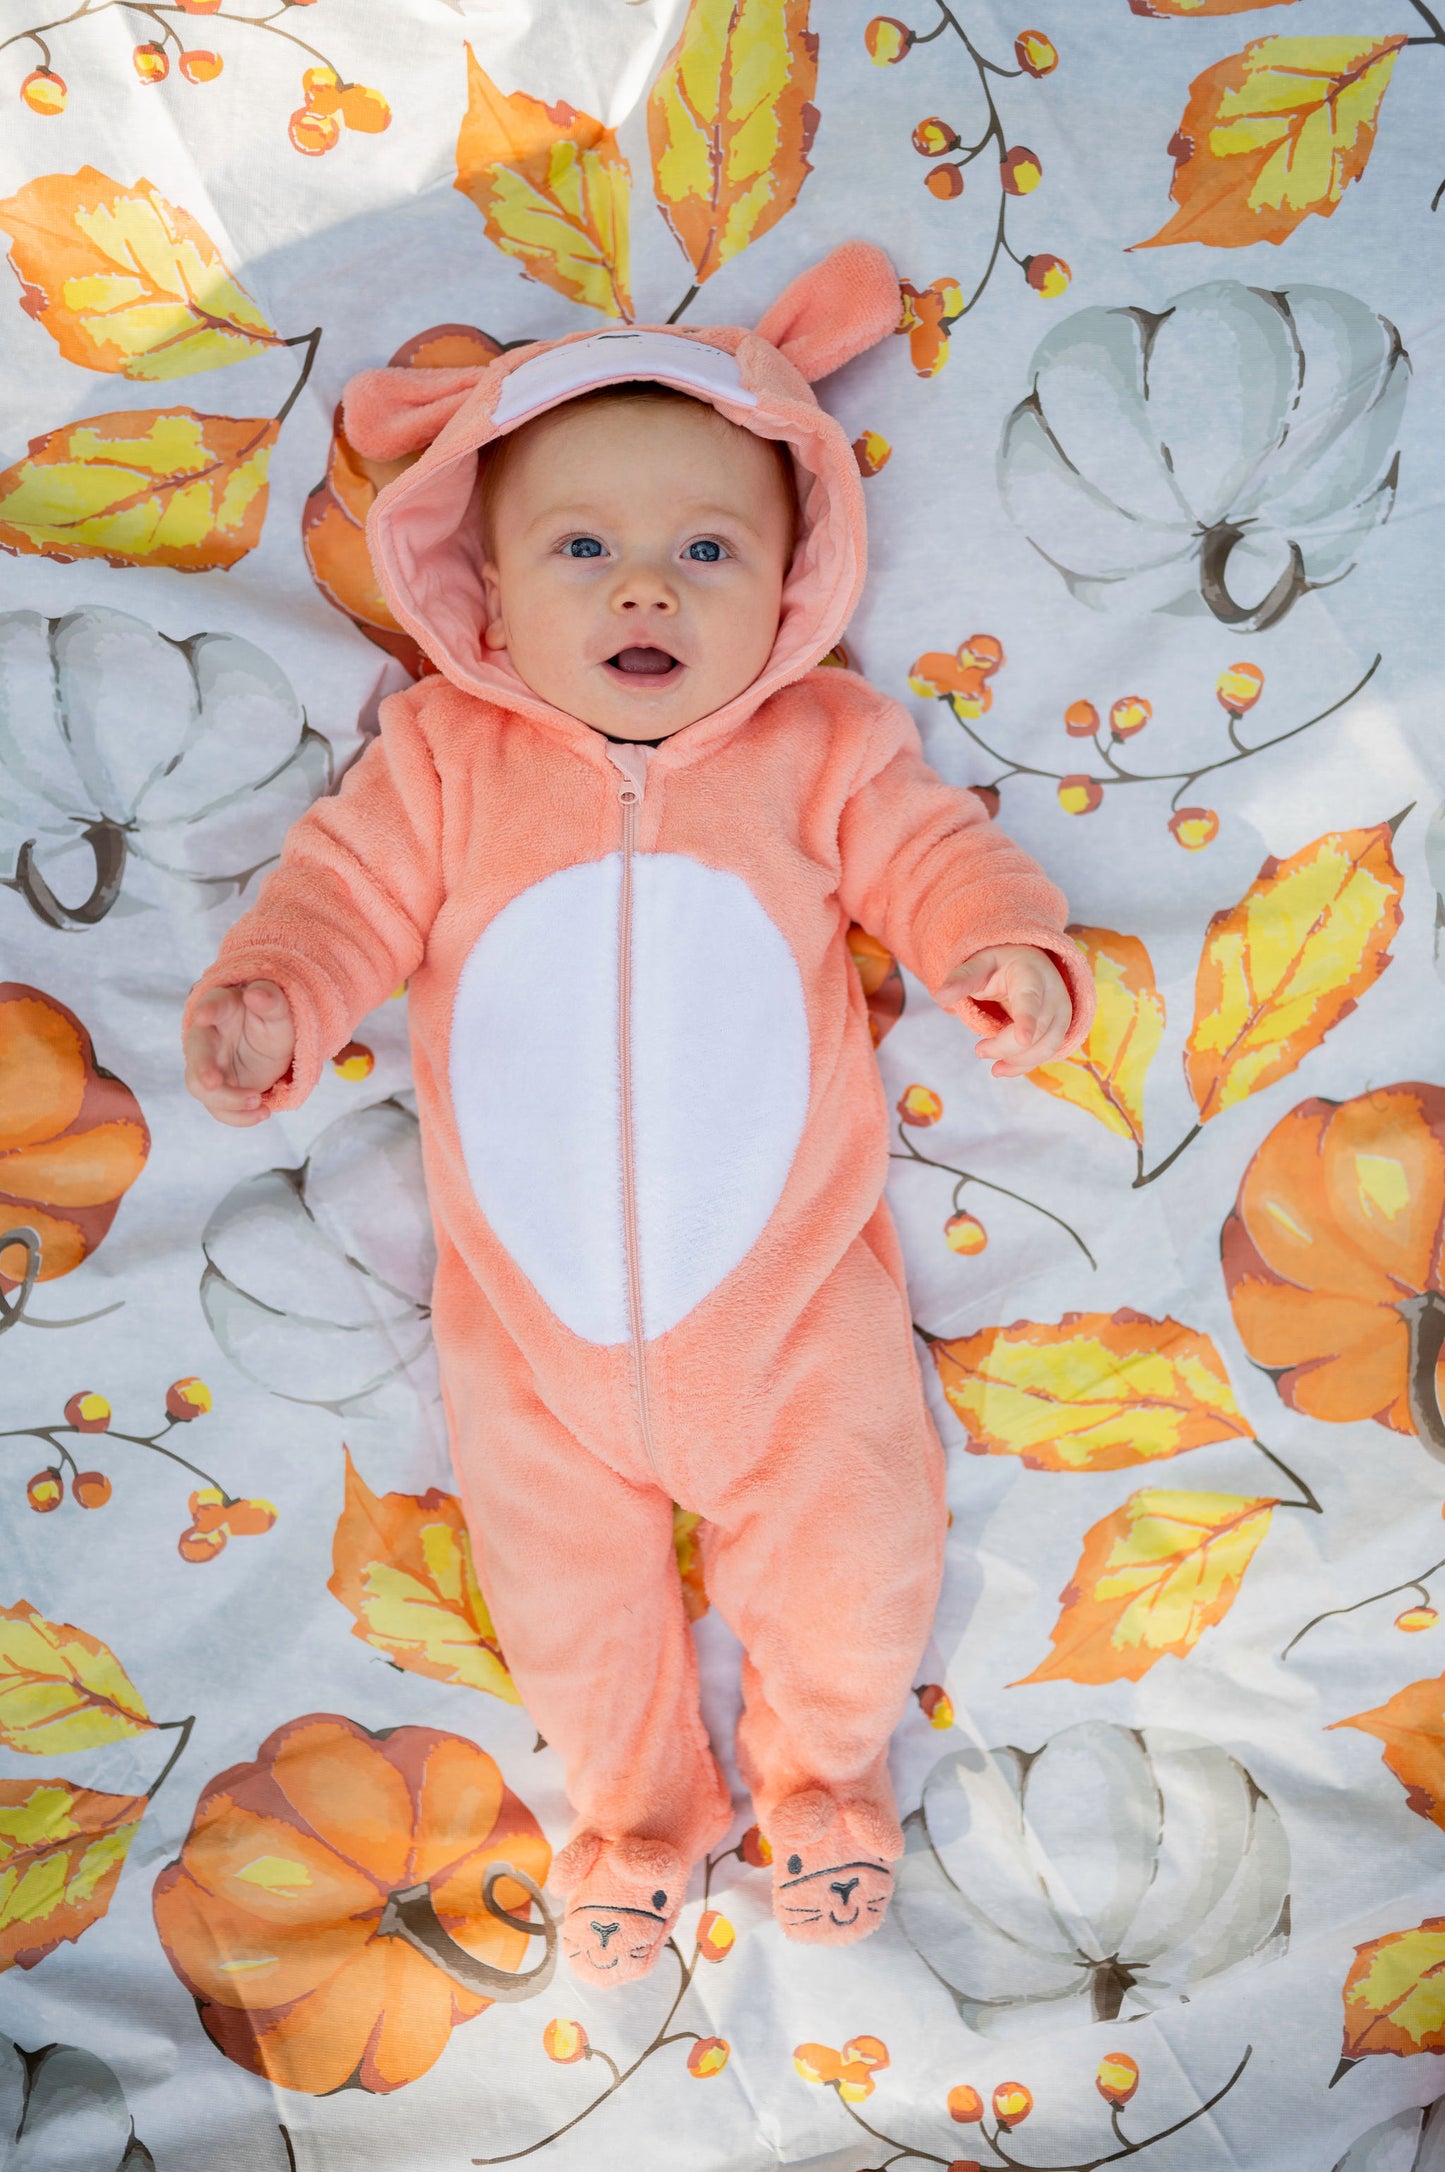 Bunny Baby Plush Softie Animal Costume With Ears